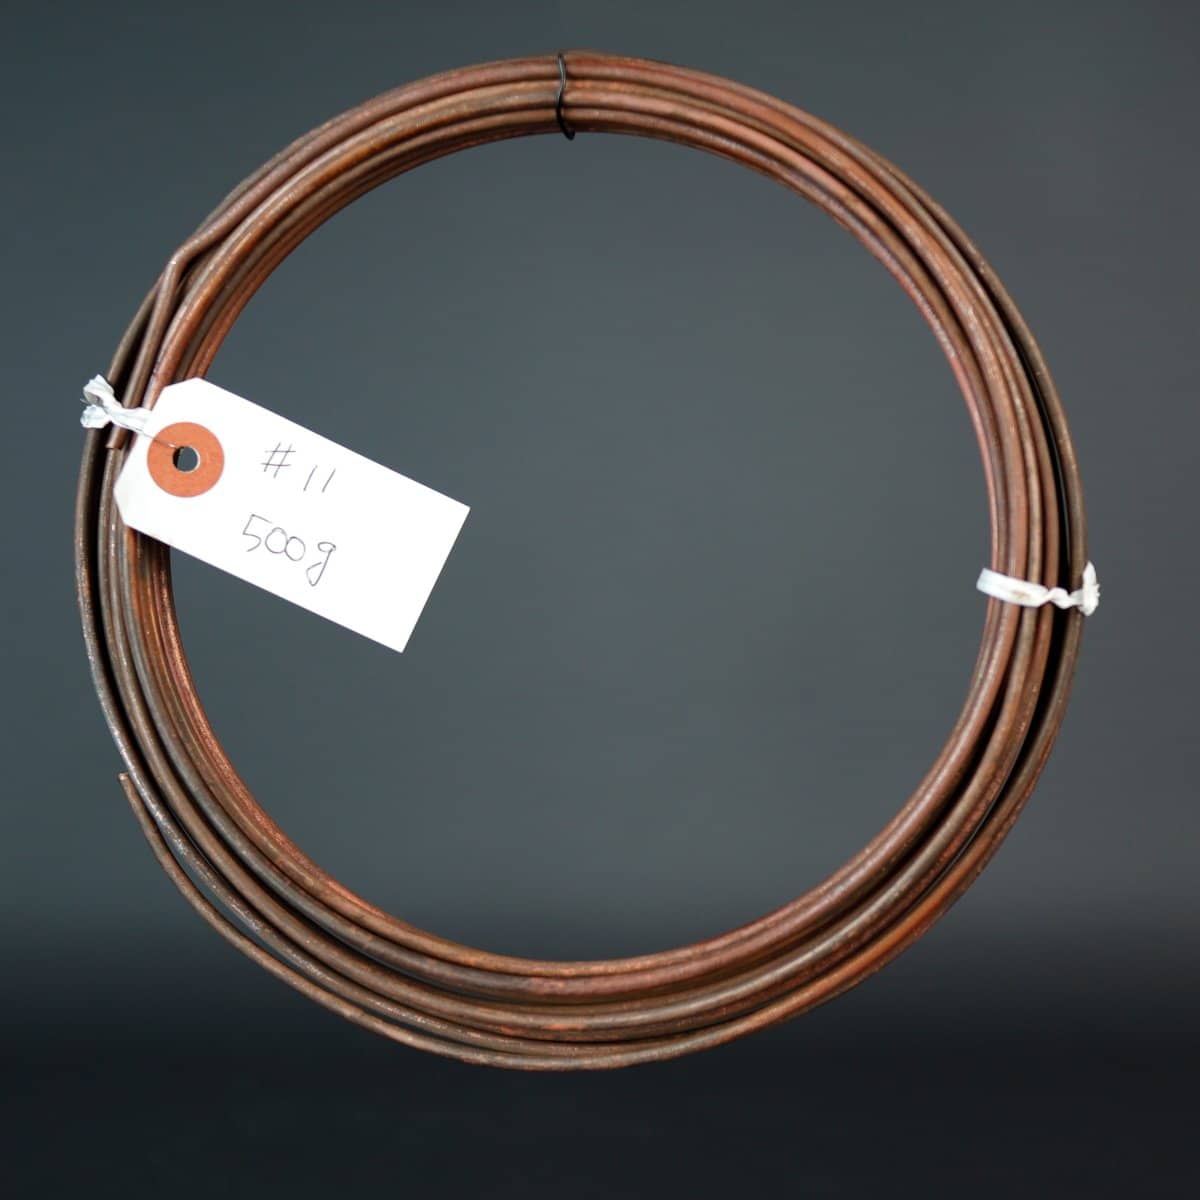 #11 Gauge Copper Bonsai Wire 500g - Bonsai-En